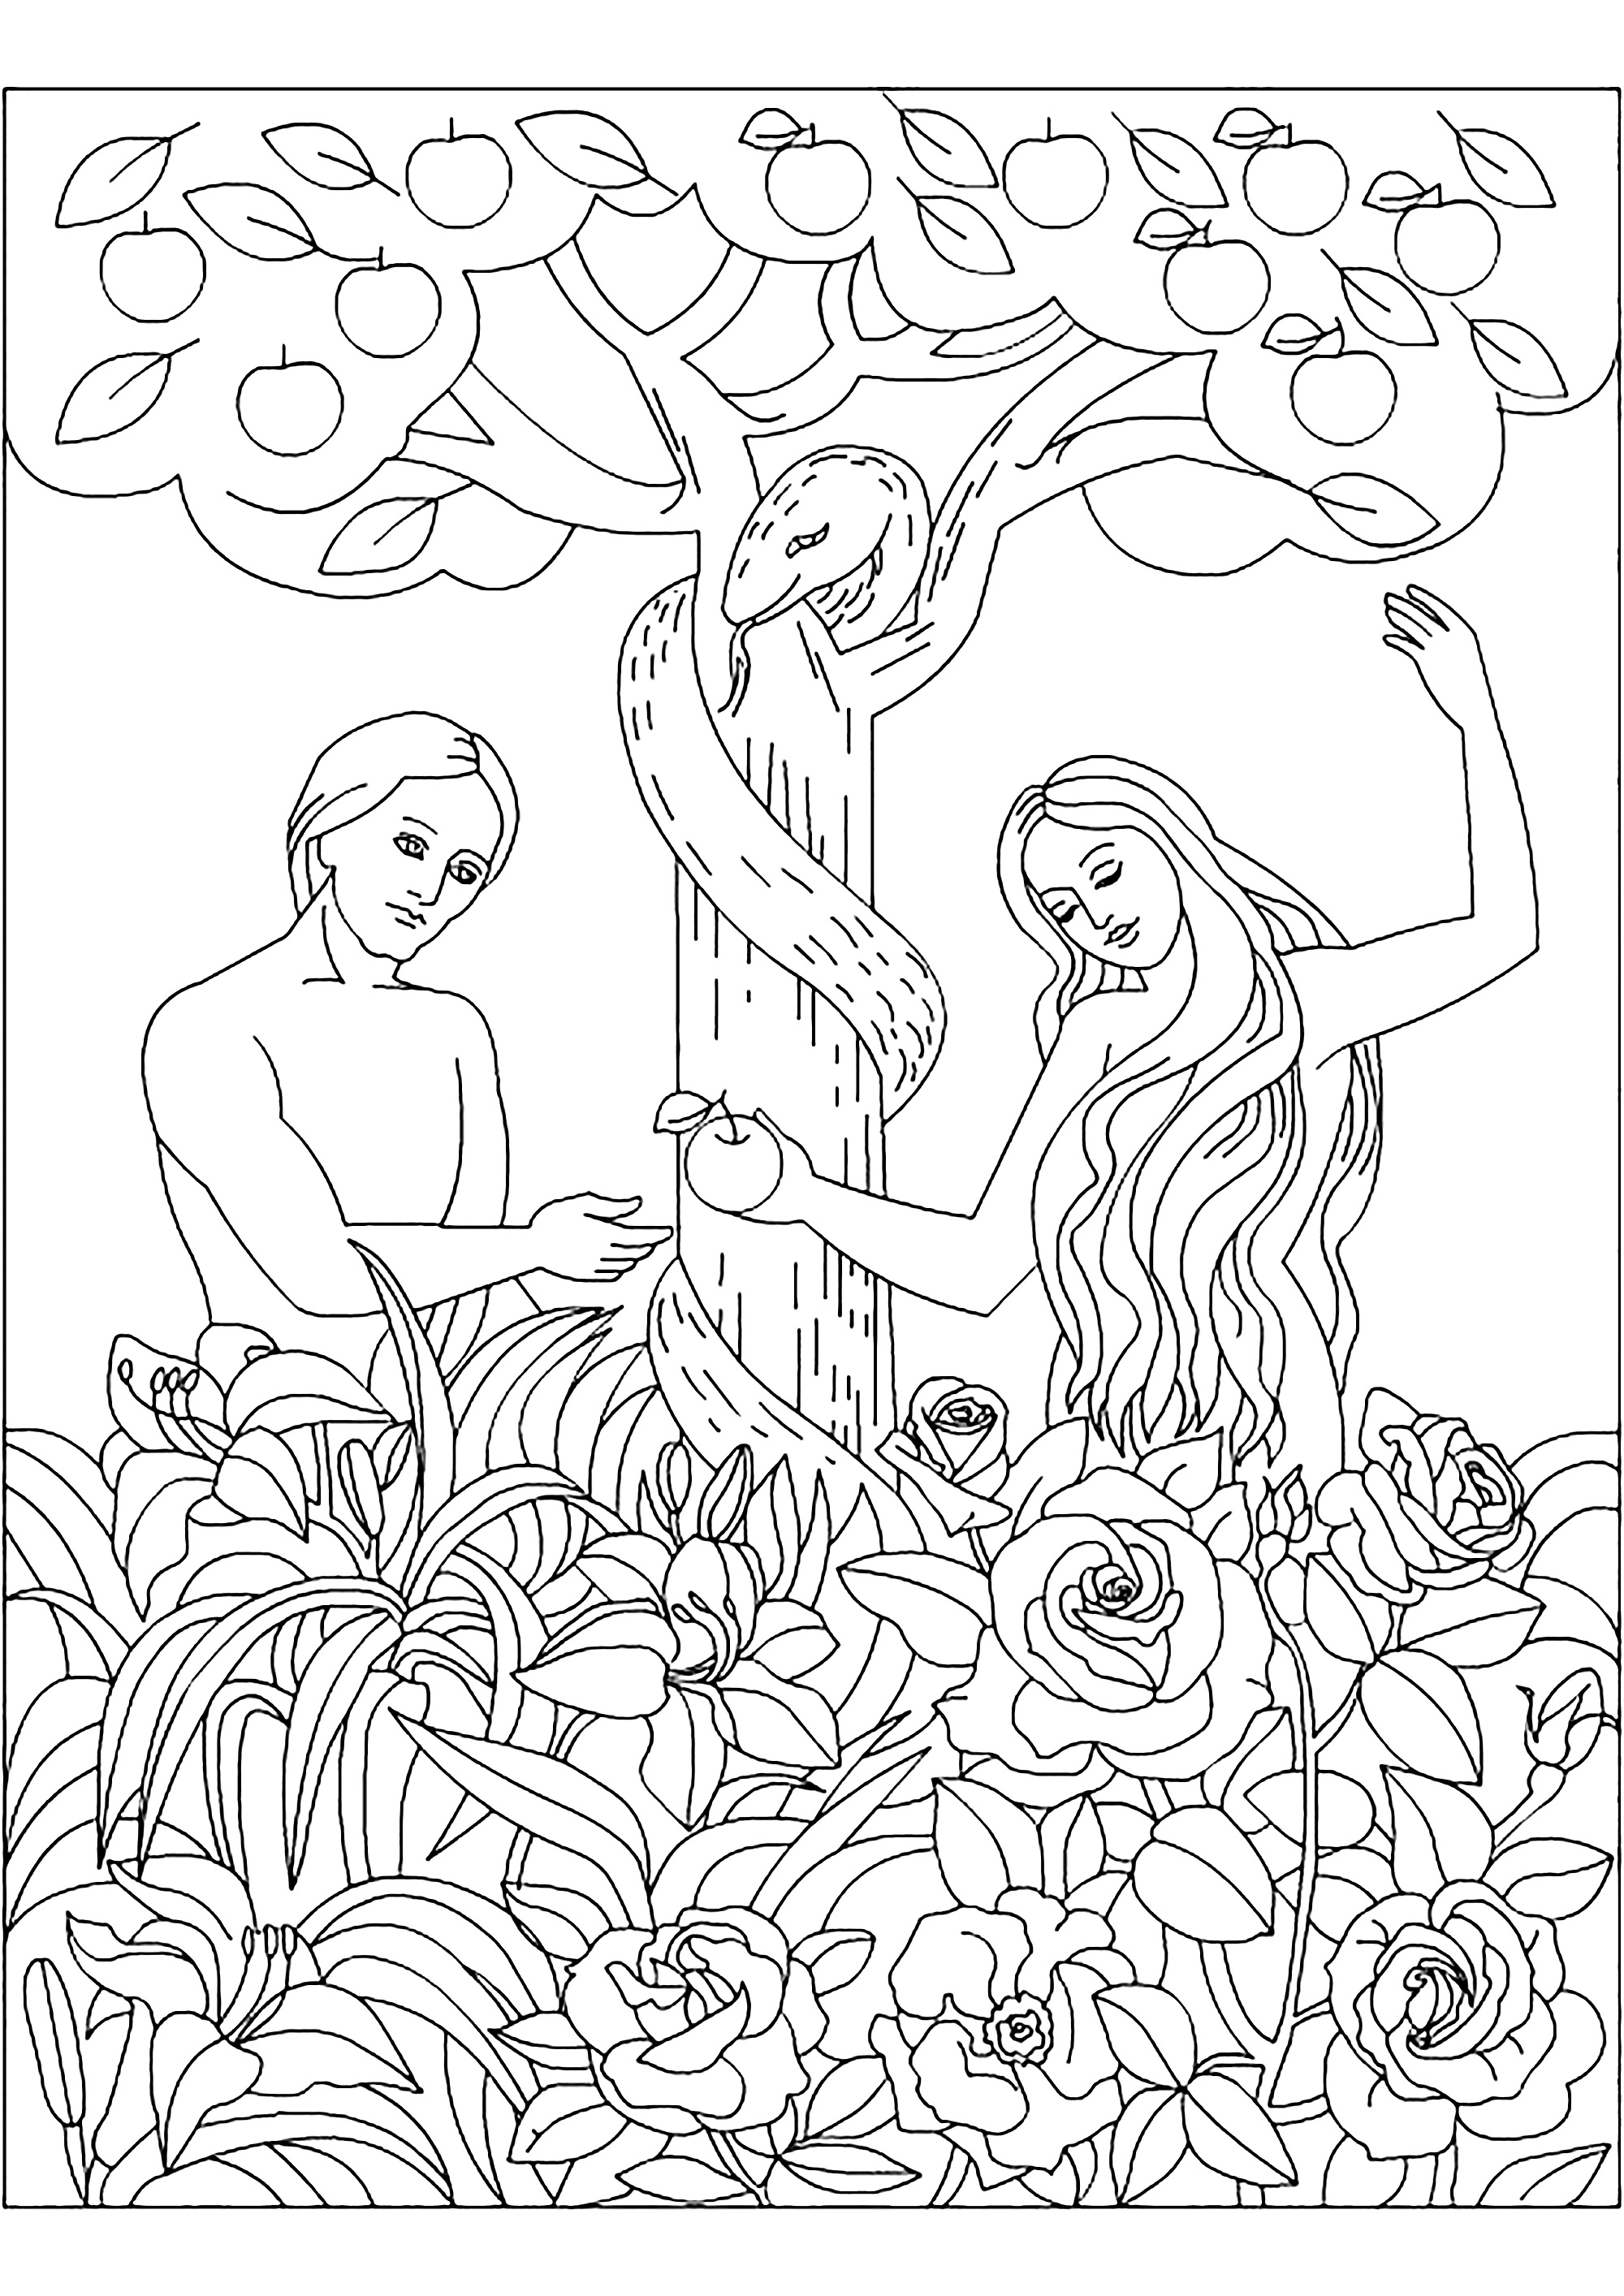 Joli coloriage de Adam et Eve. Coloriez Adam, Eve, le serpent et la fameuse pomme